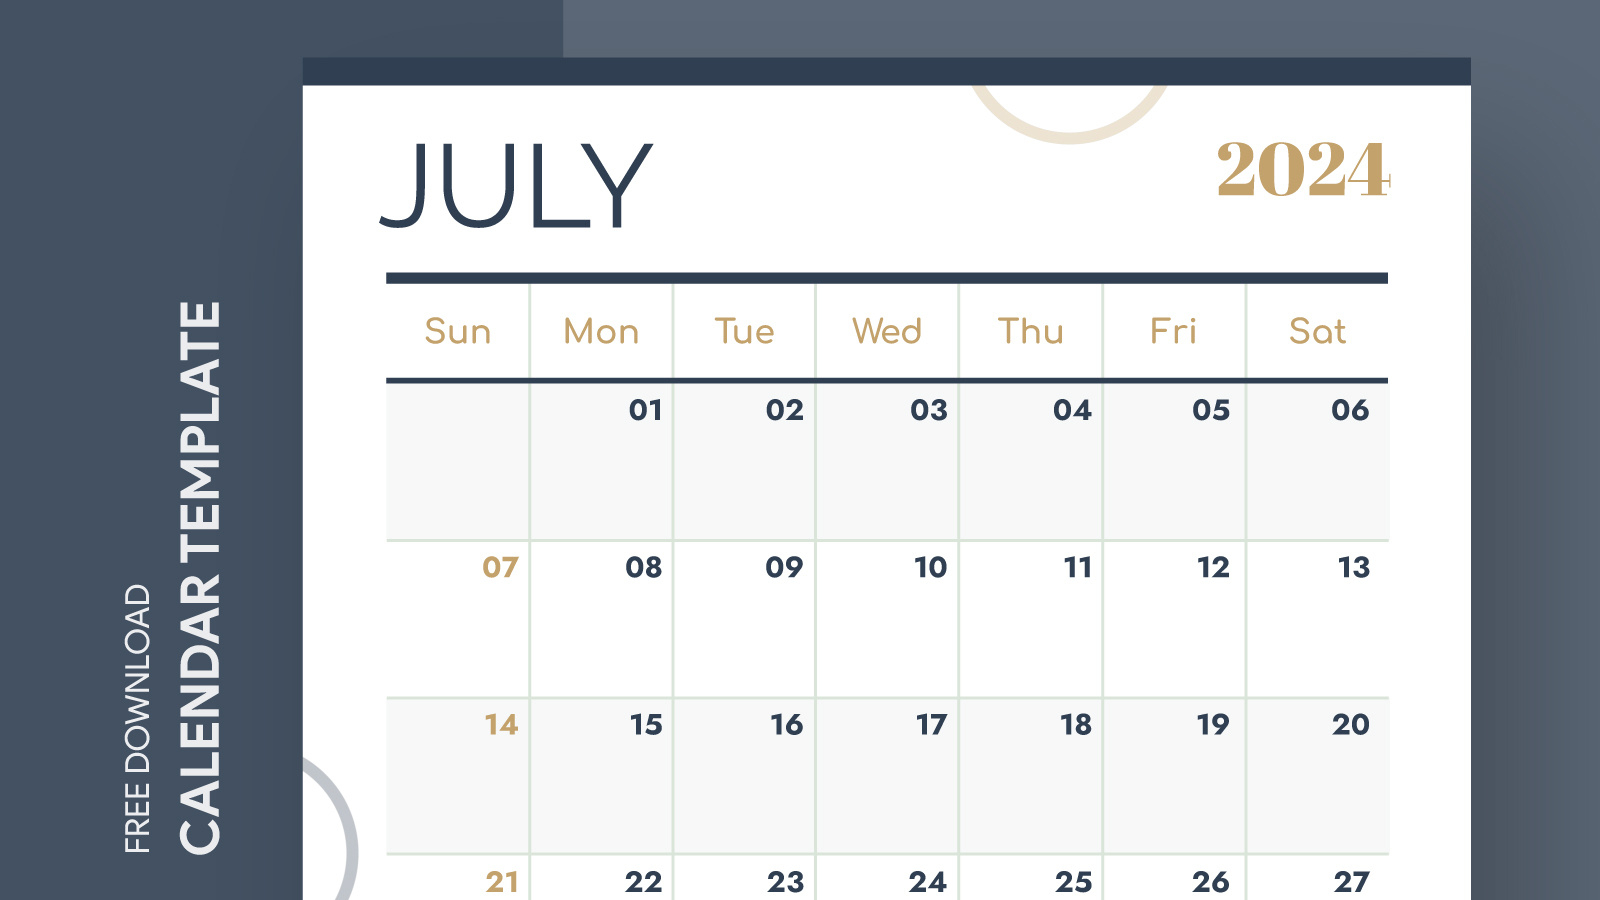 July 2024 Calendar Free Google Docs Template - Gdoc.io with regard to July 2024 Calendar Word Doc